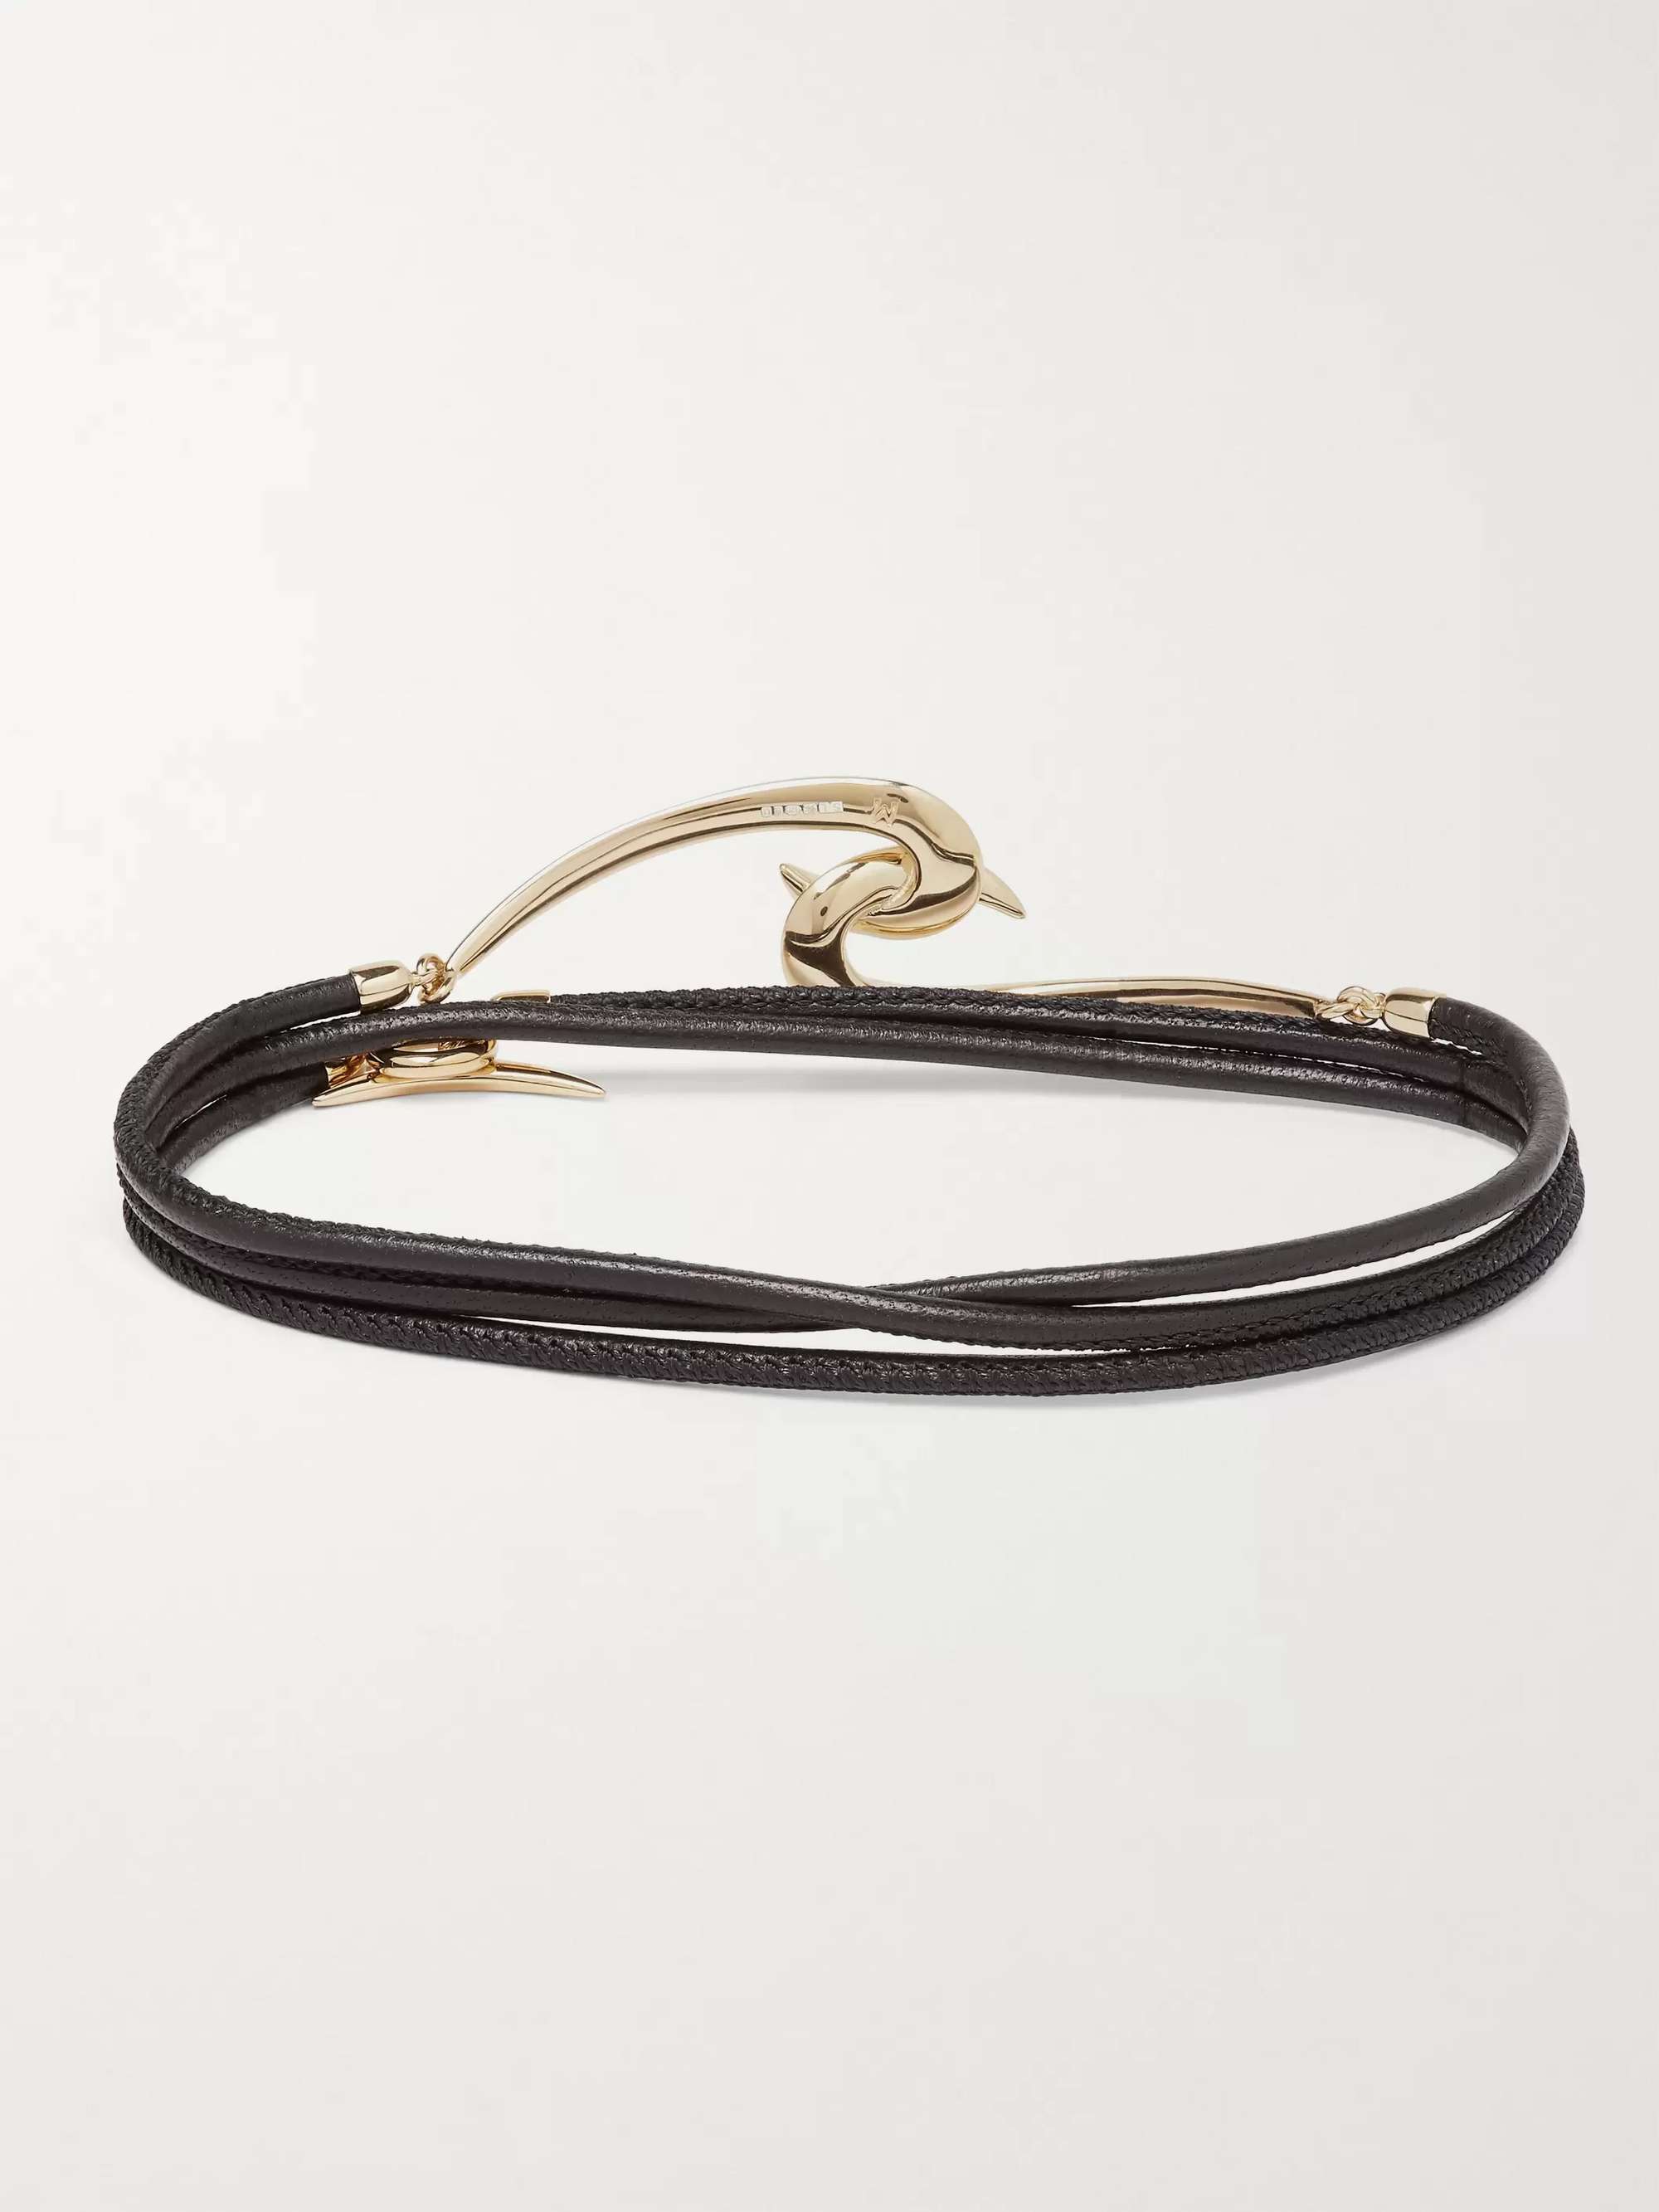 SHAUN LEANE Leather and Gold Vermeil Wrap Bracelet